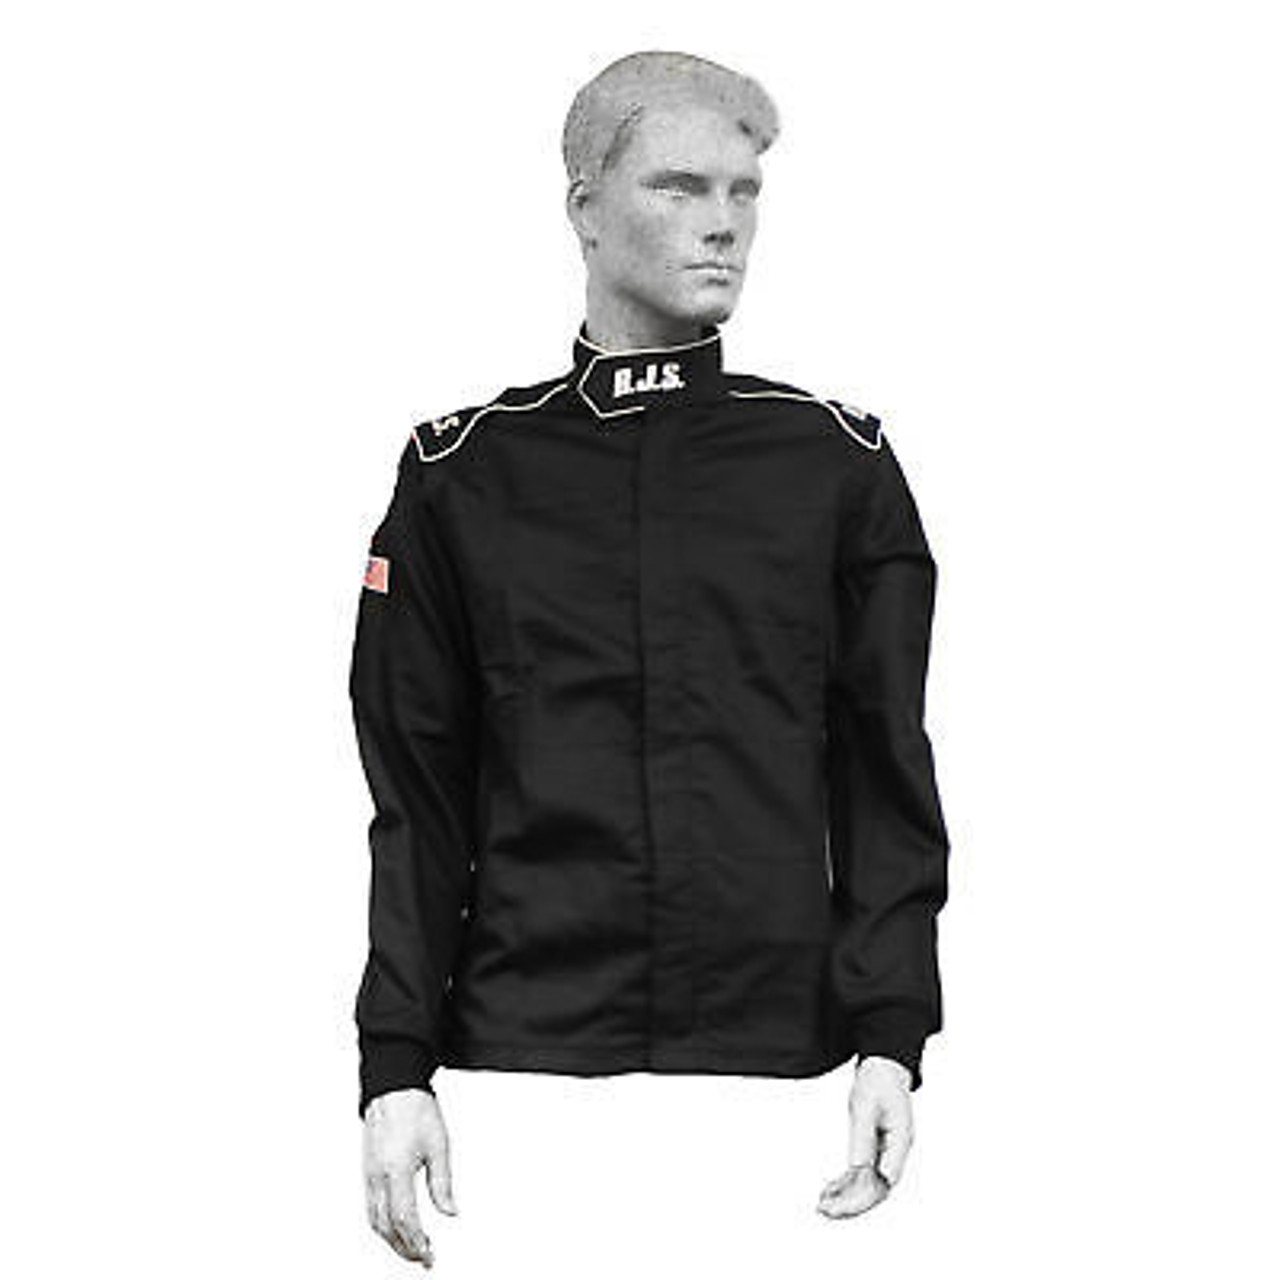 Jacket Elite Large SFI- 3.2A/20 Black